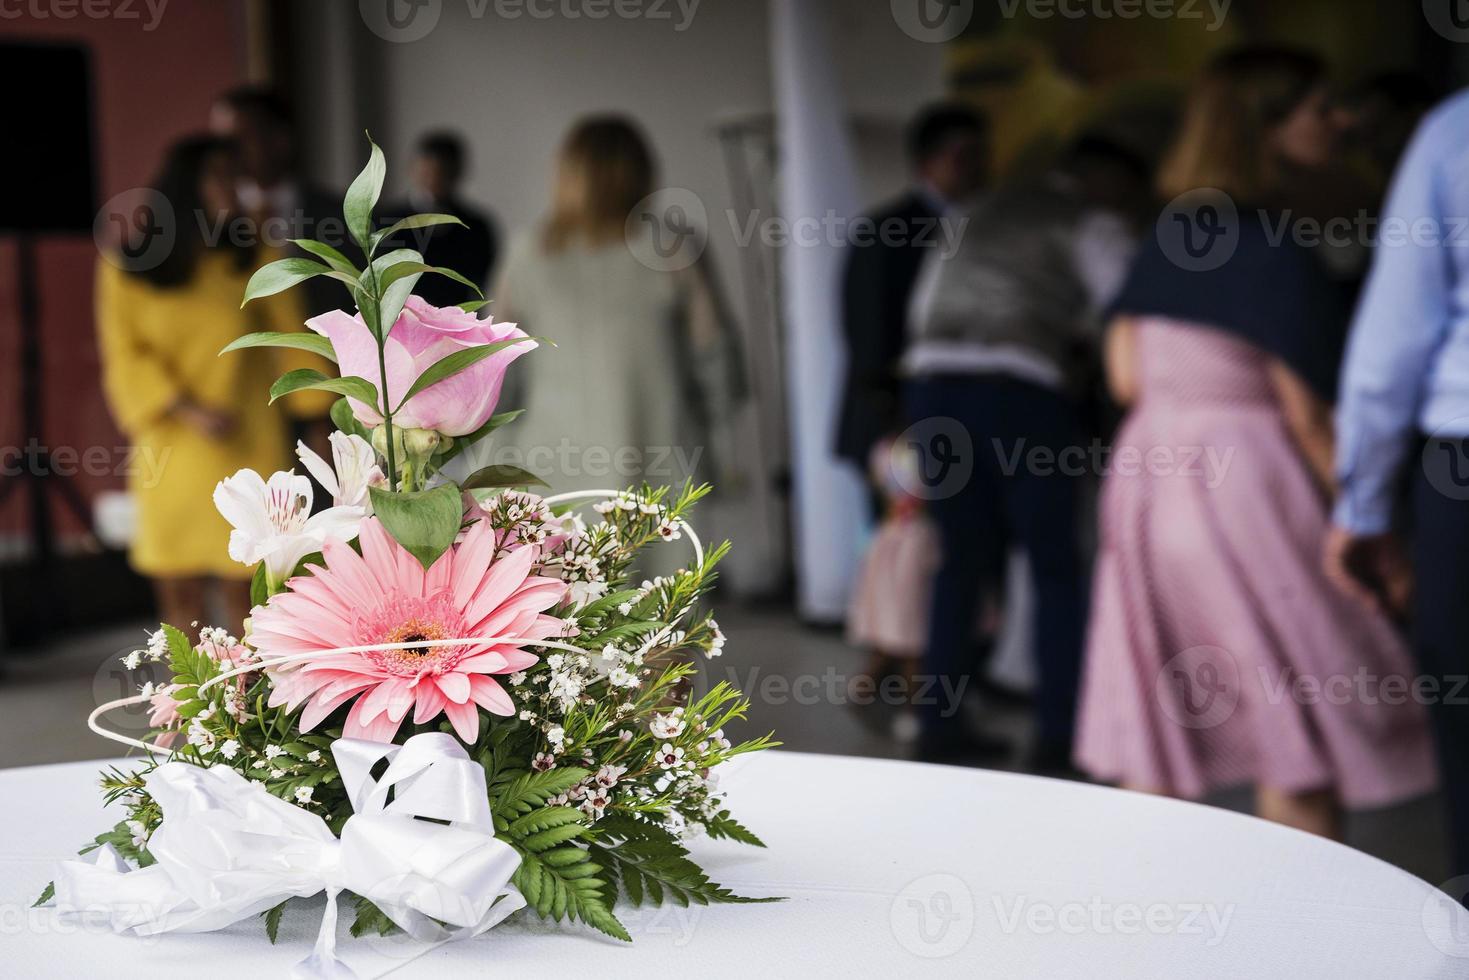 enkel blomsterarrangemang dekorationsdetalj vid modern bröllopsceremoni foto